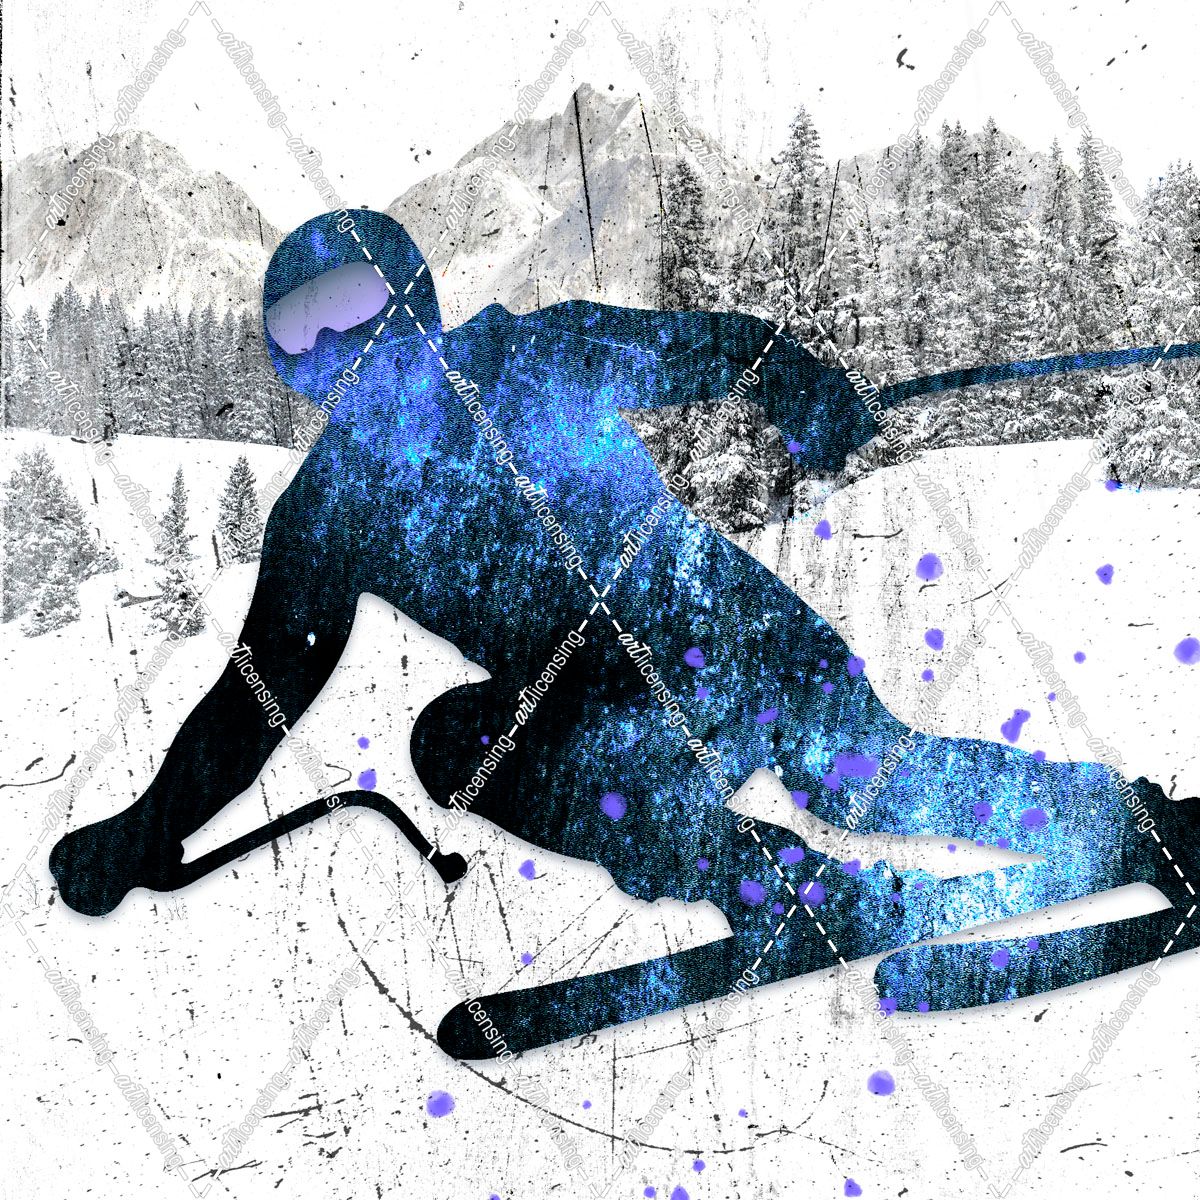 Extreme Skier 06